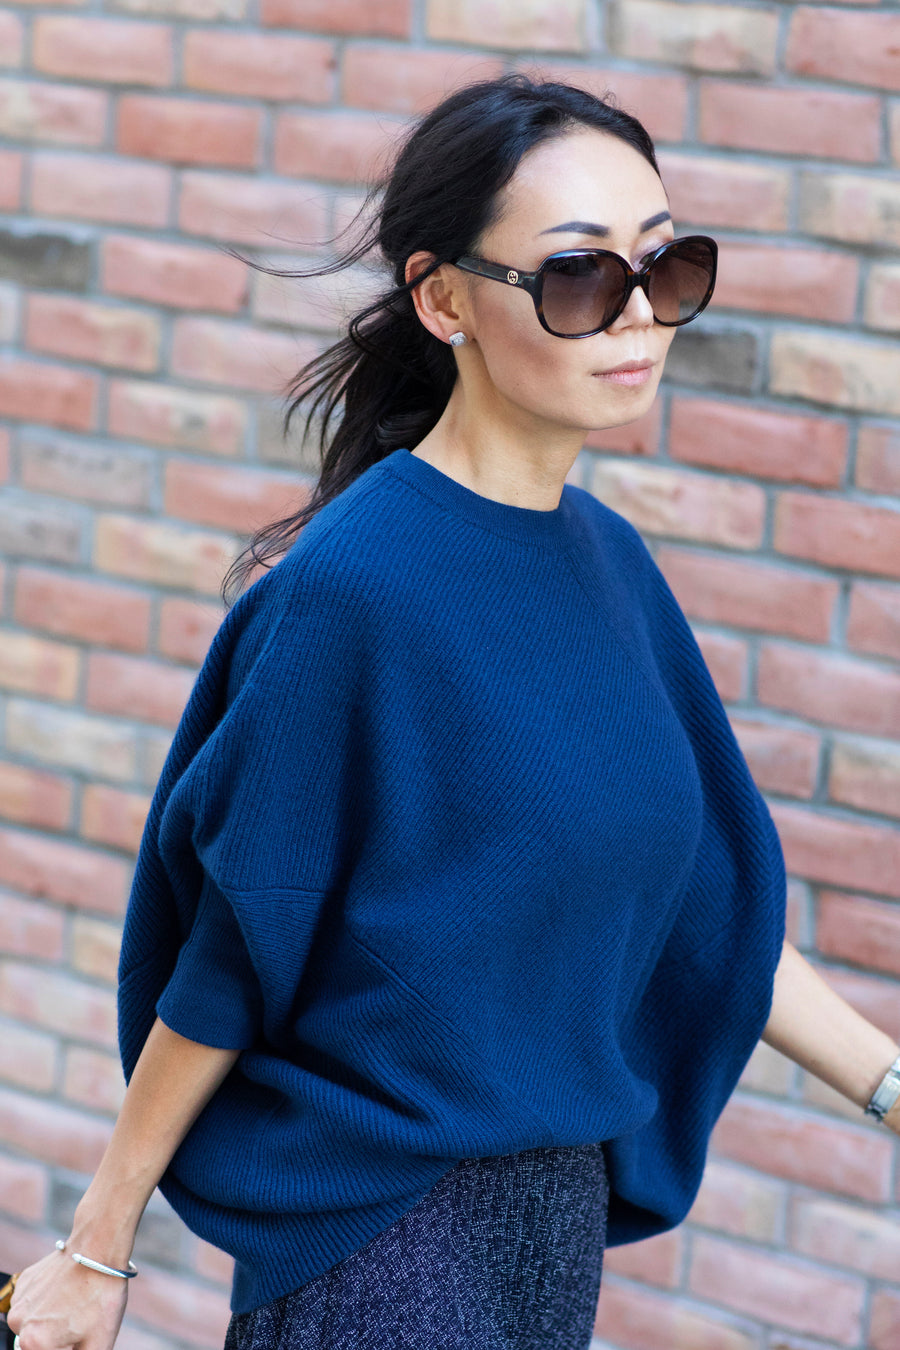 pine cashmere women's cara crewneck 100% pure cashmere poncho sweater in blue